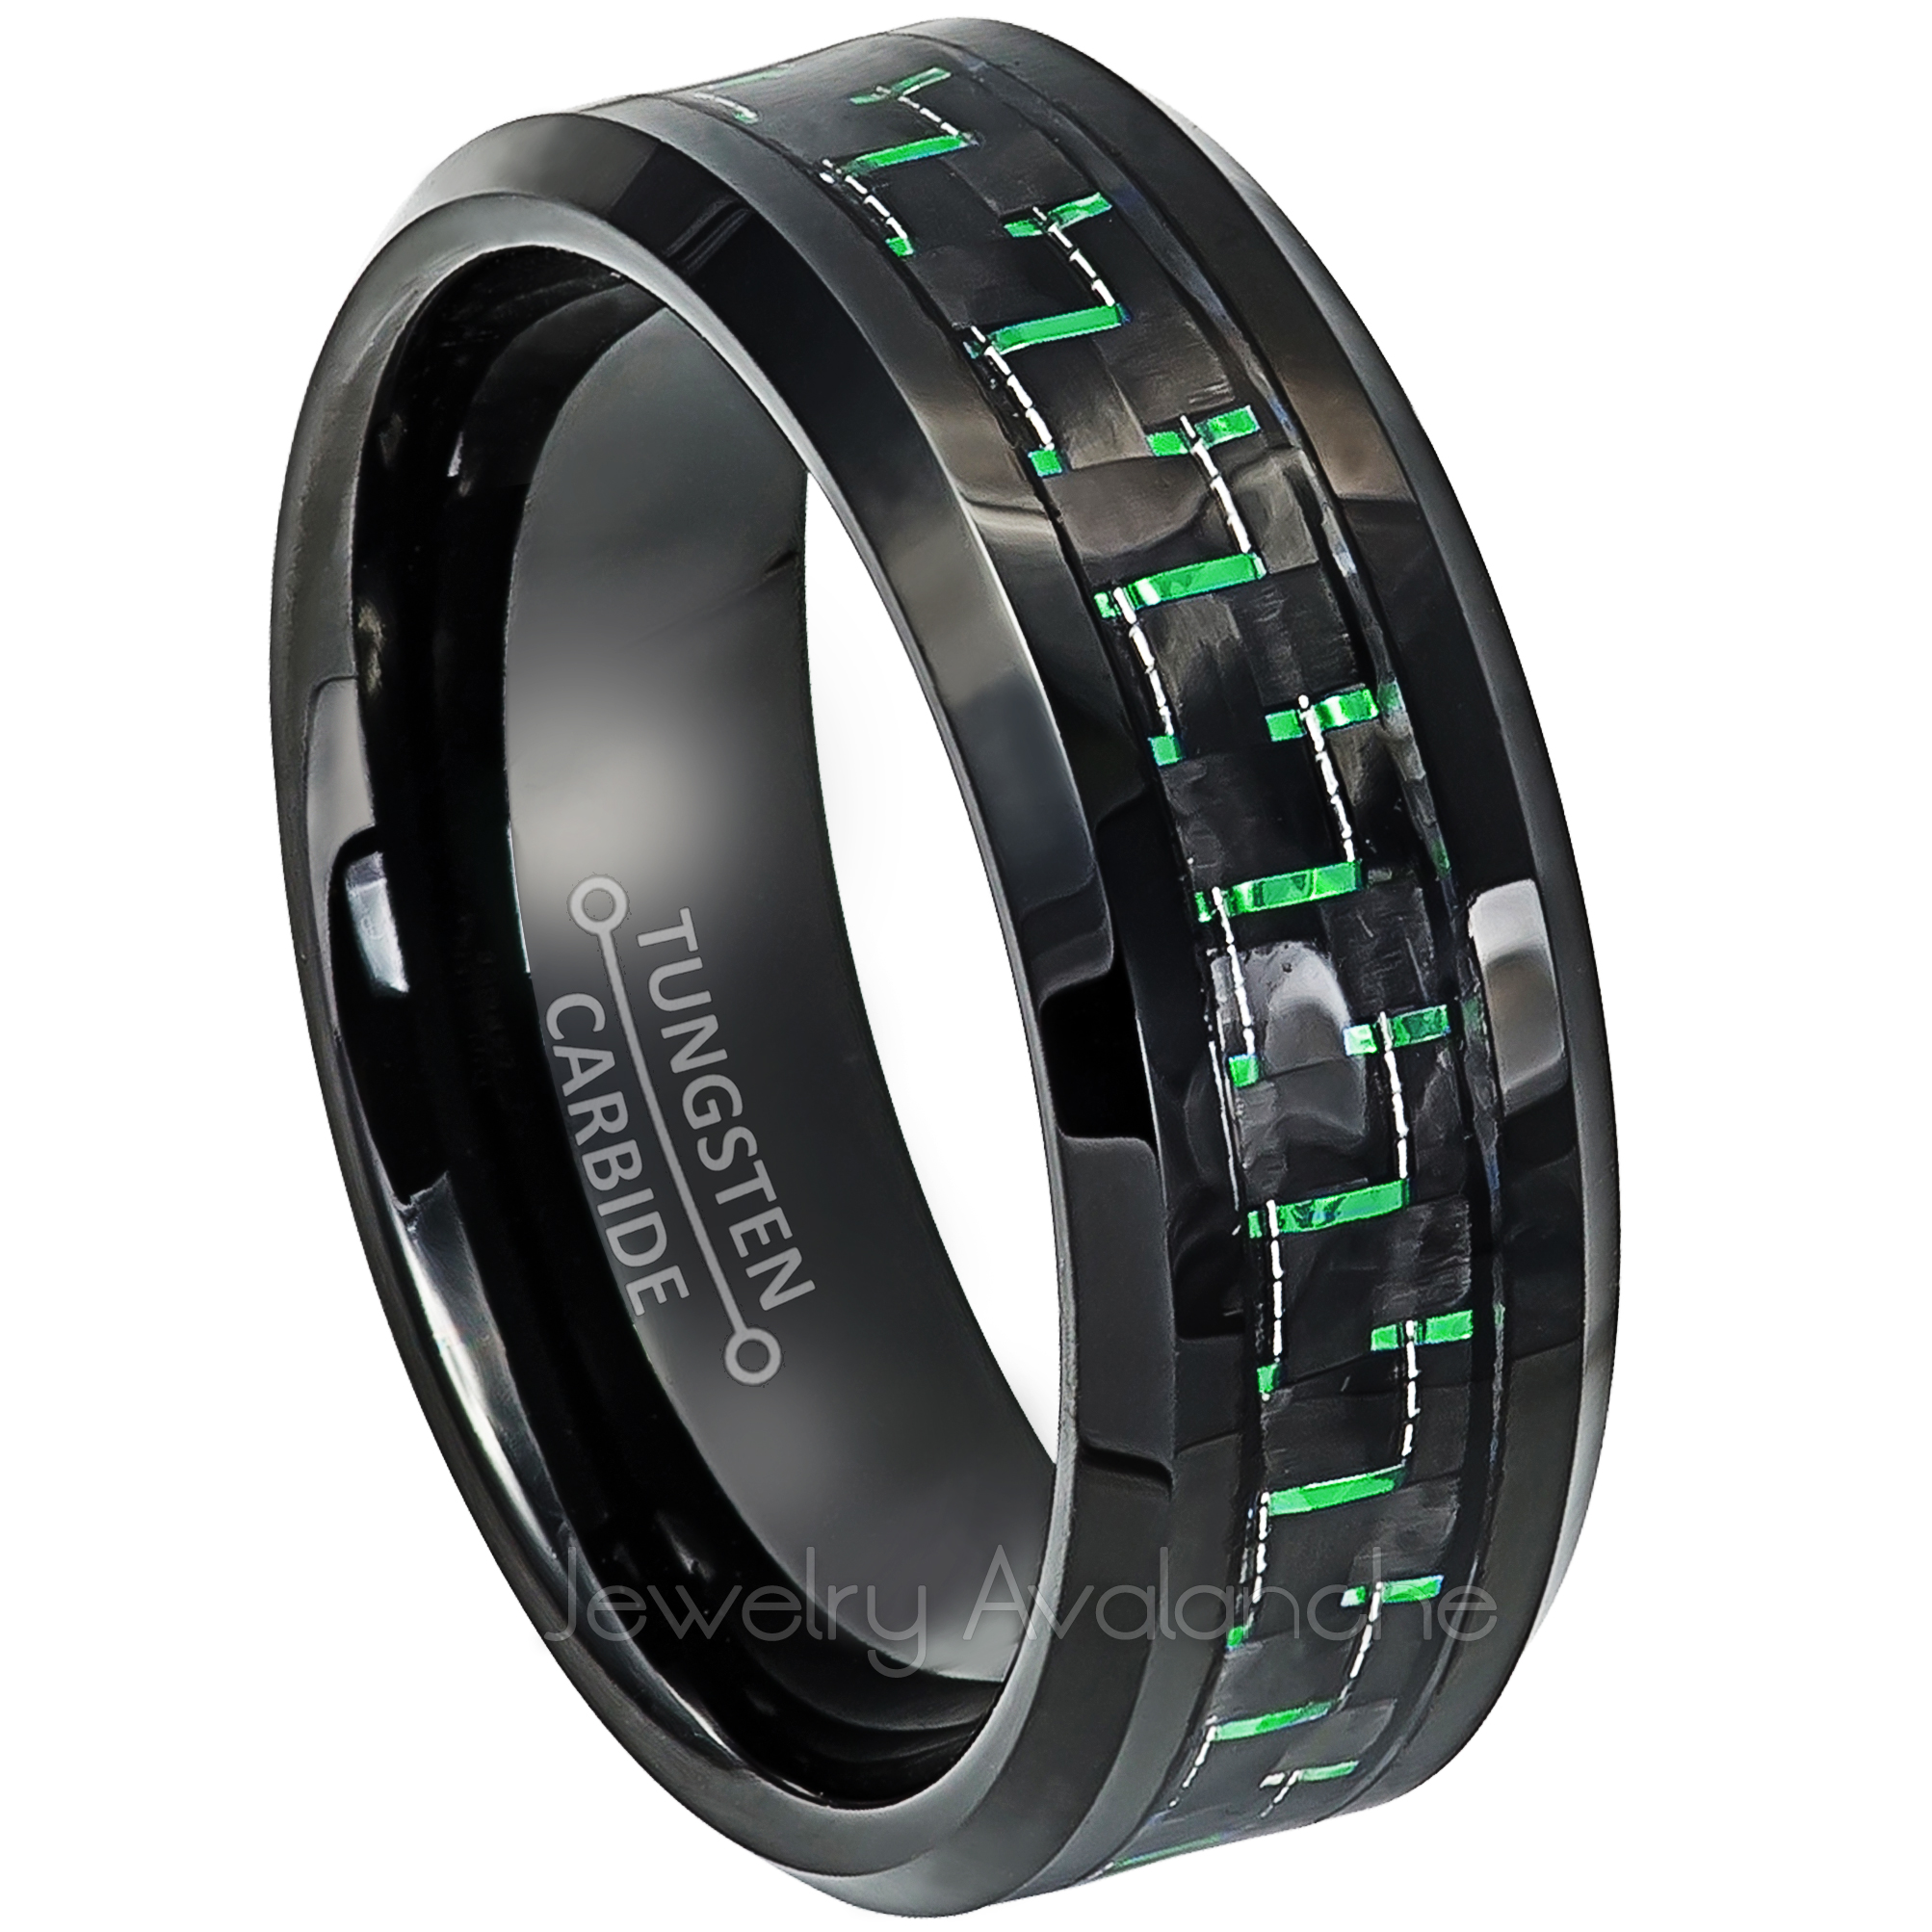 Cobalt Ring with Green Carbon Fiber Inlay